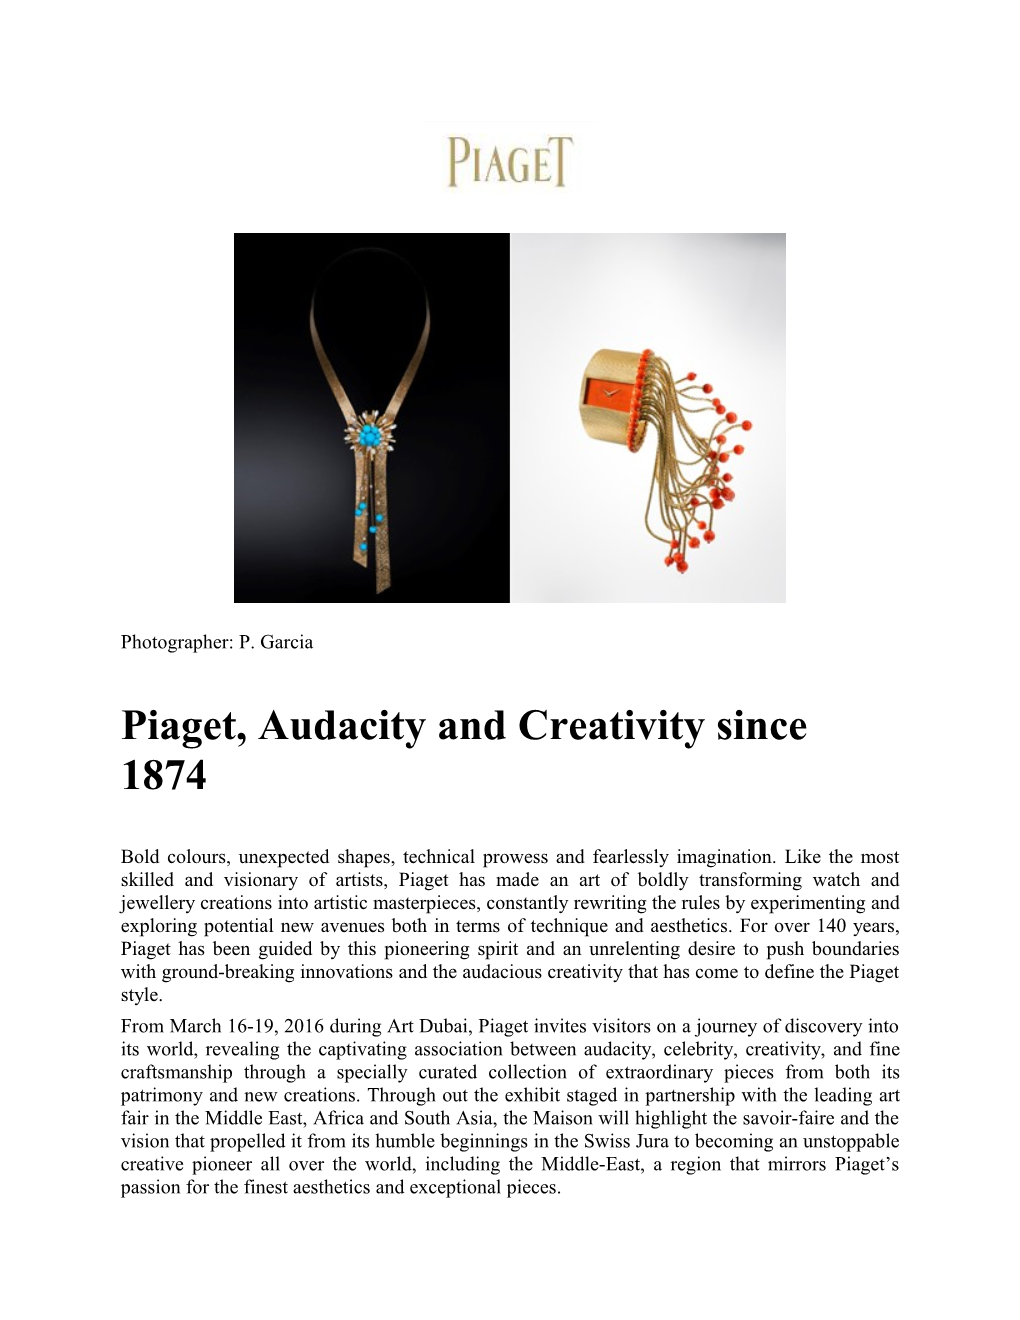 Piaget, Audacity and Creativity Since 1874